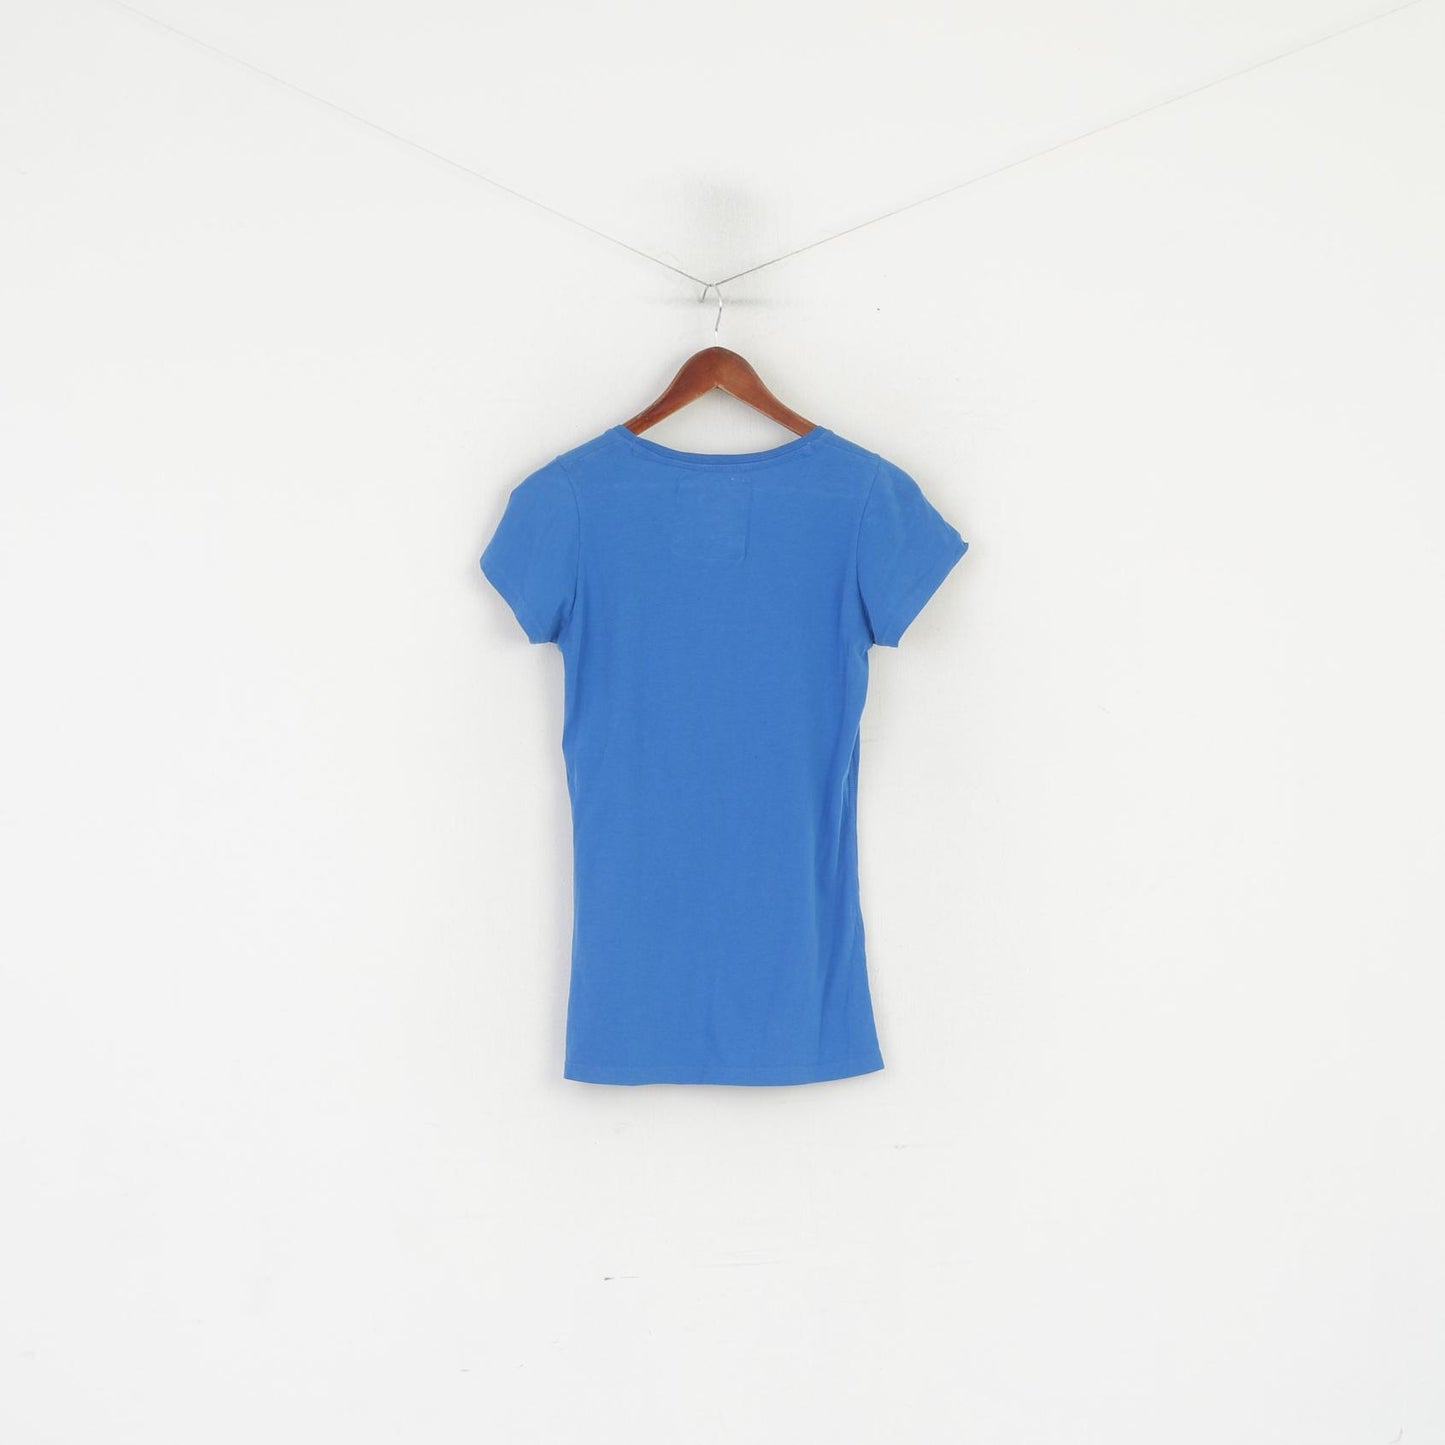 Superdry Femme L Shirt Bleu Coton Graphique Coupe Slim Col Ras Du Cou Stretch Top